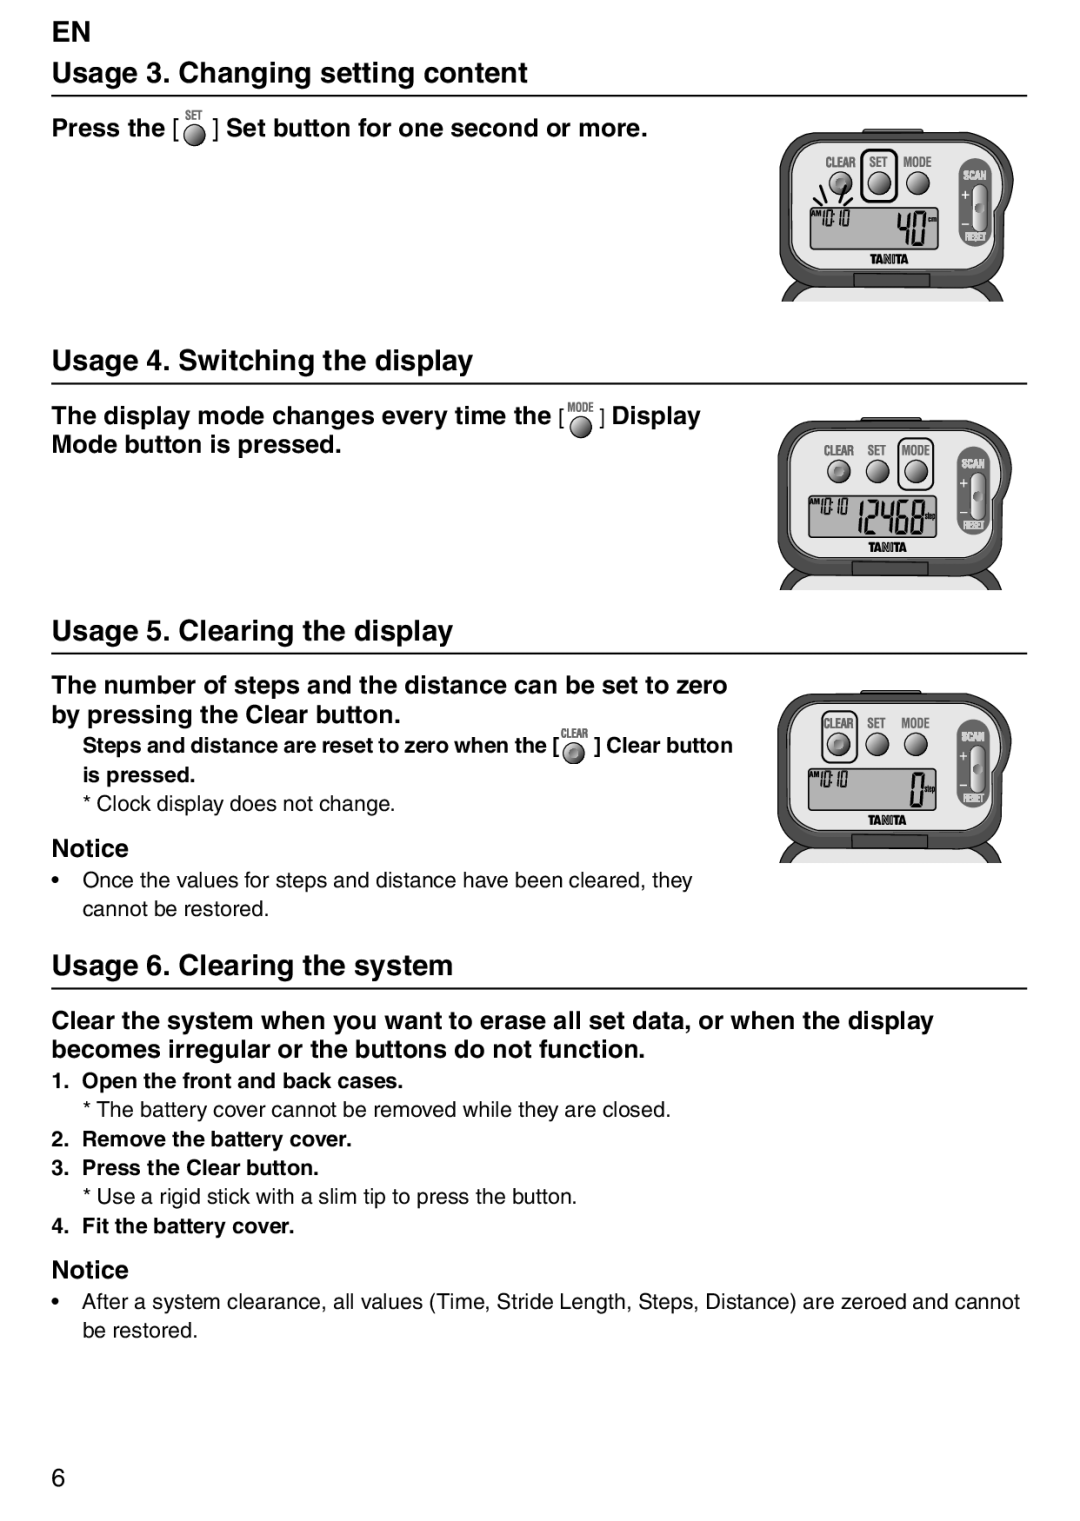 Tanita PD640 EN Usage 3. Changing setting content, Usage 4. Switching the display, Usage 5. Clearing the display 